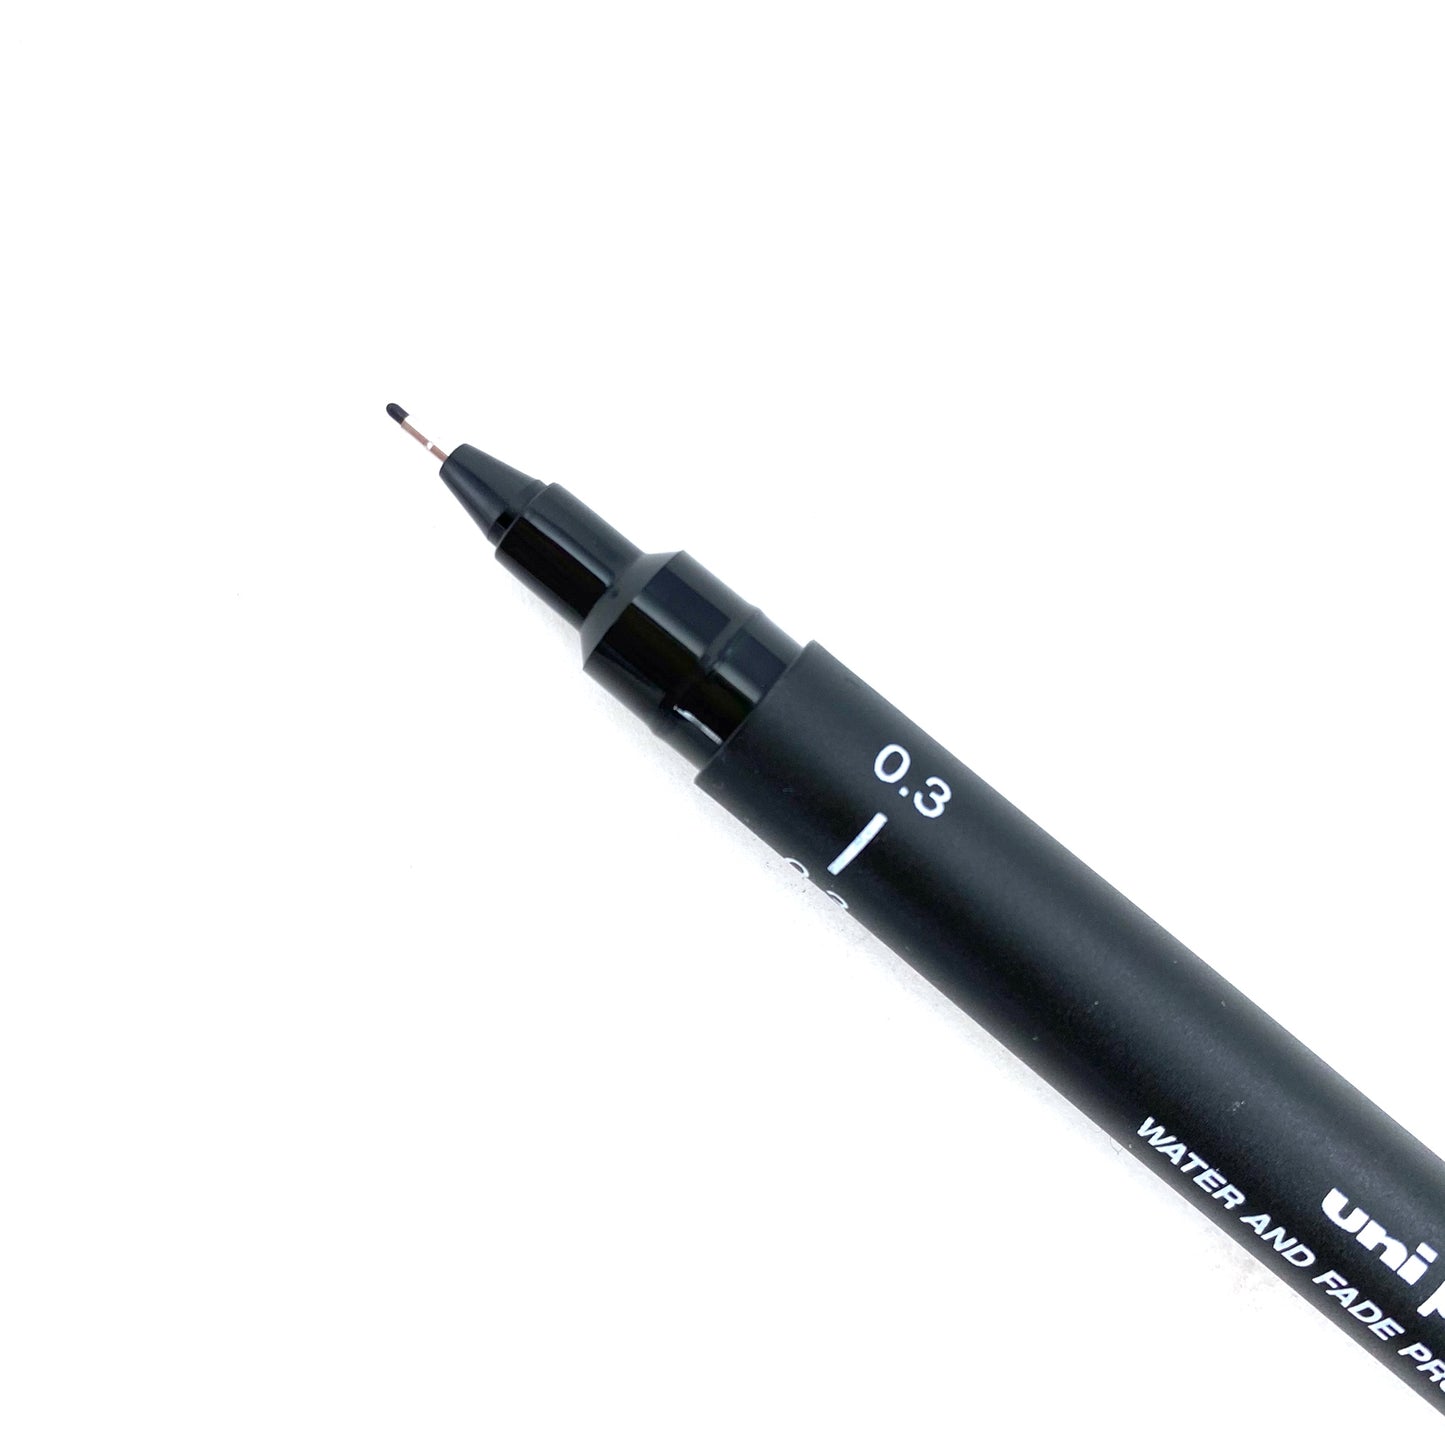 Uni Pin Fineliner Pens - .3mm by Uni-Ball - K. A. Artist Shop